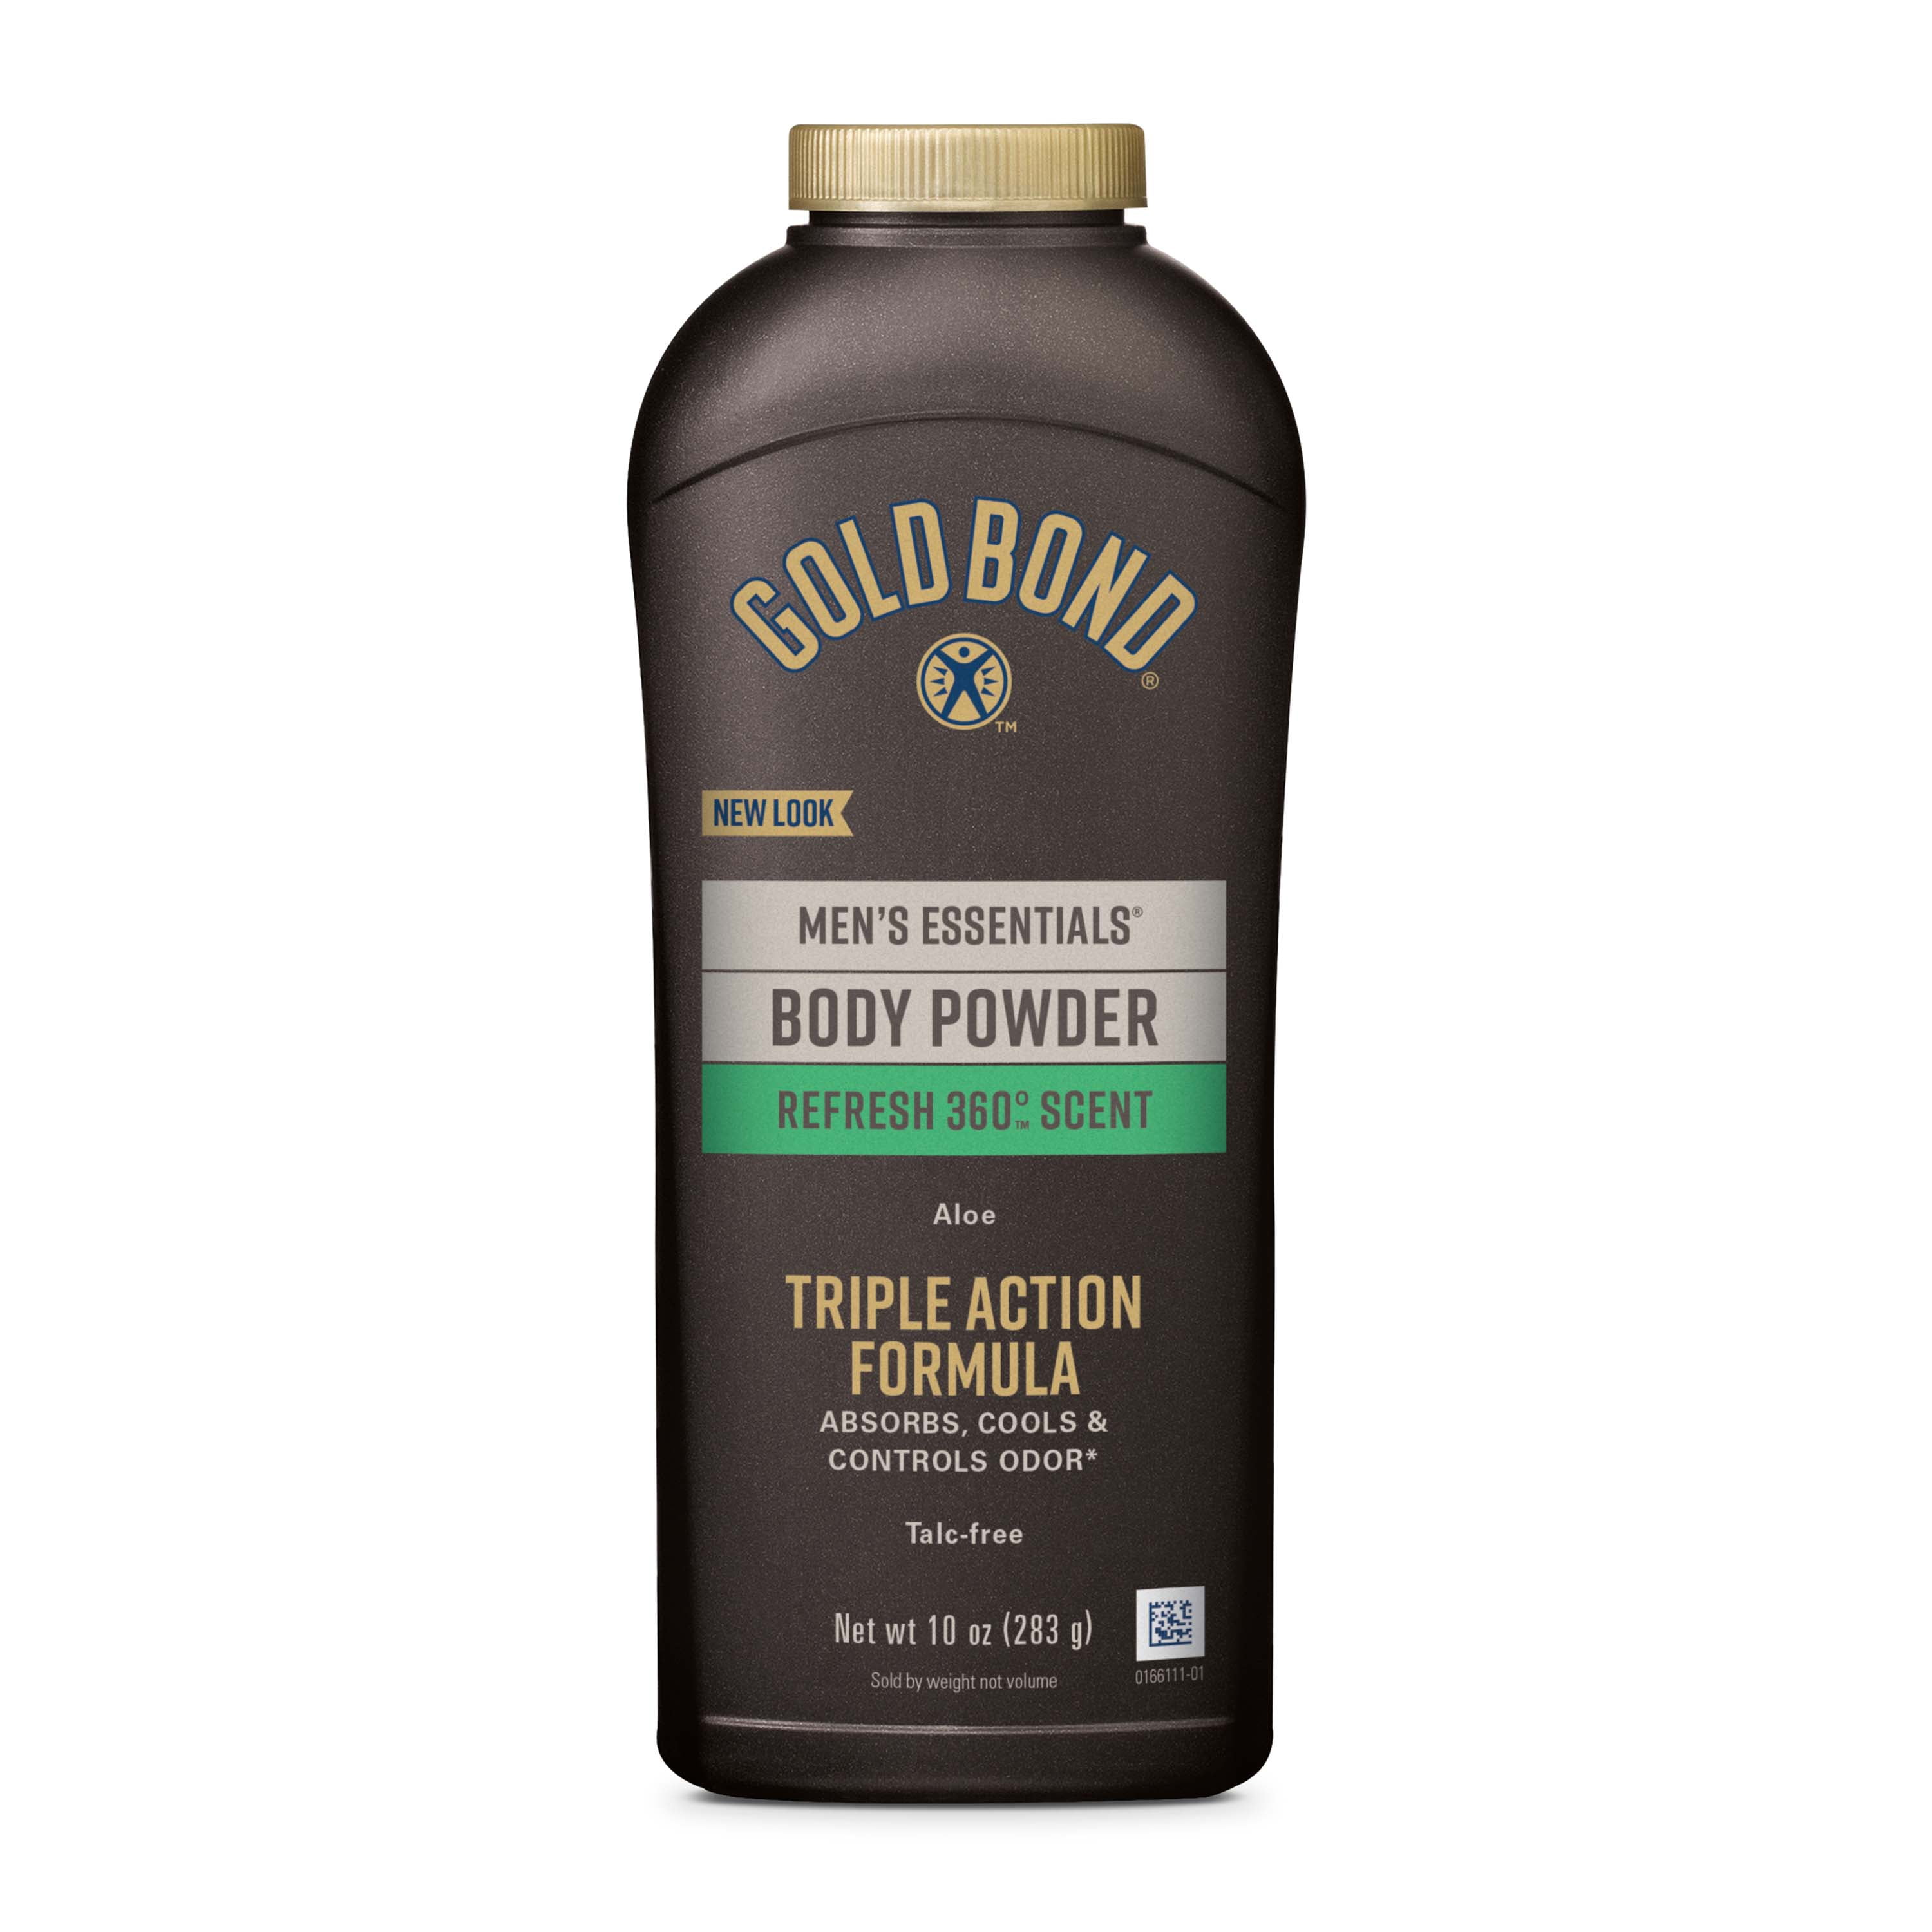 Gold Bond® Comfort Talc-Free Fresh Clean Scent Body Powder, 10 oz - Kroger